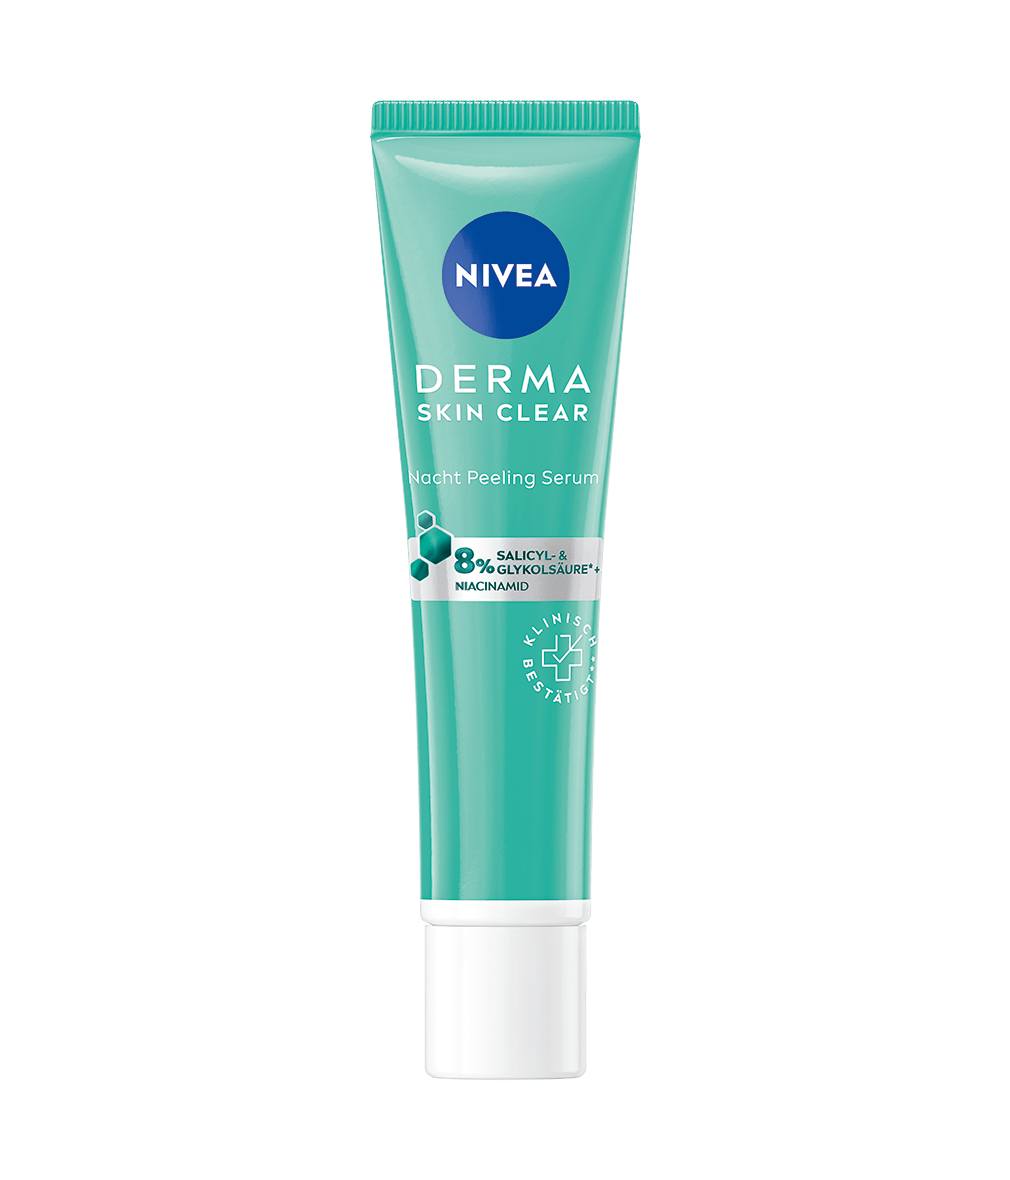 NIVEA Derma Skin Clear Nachtpeeling Serum